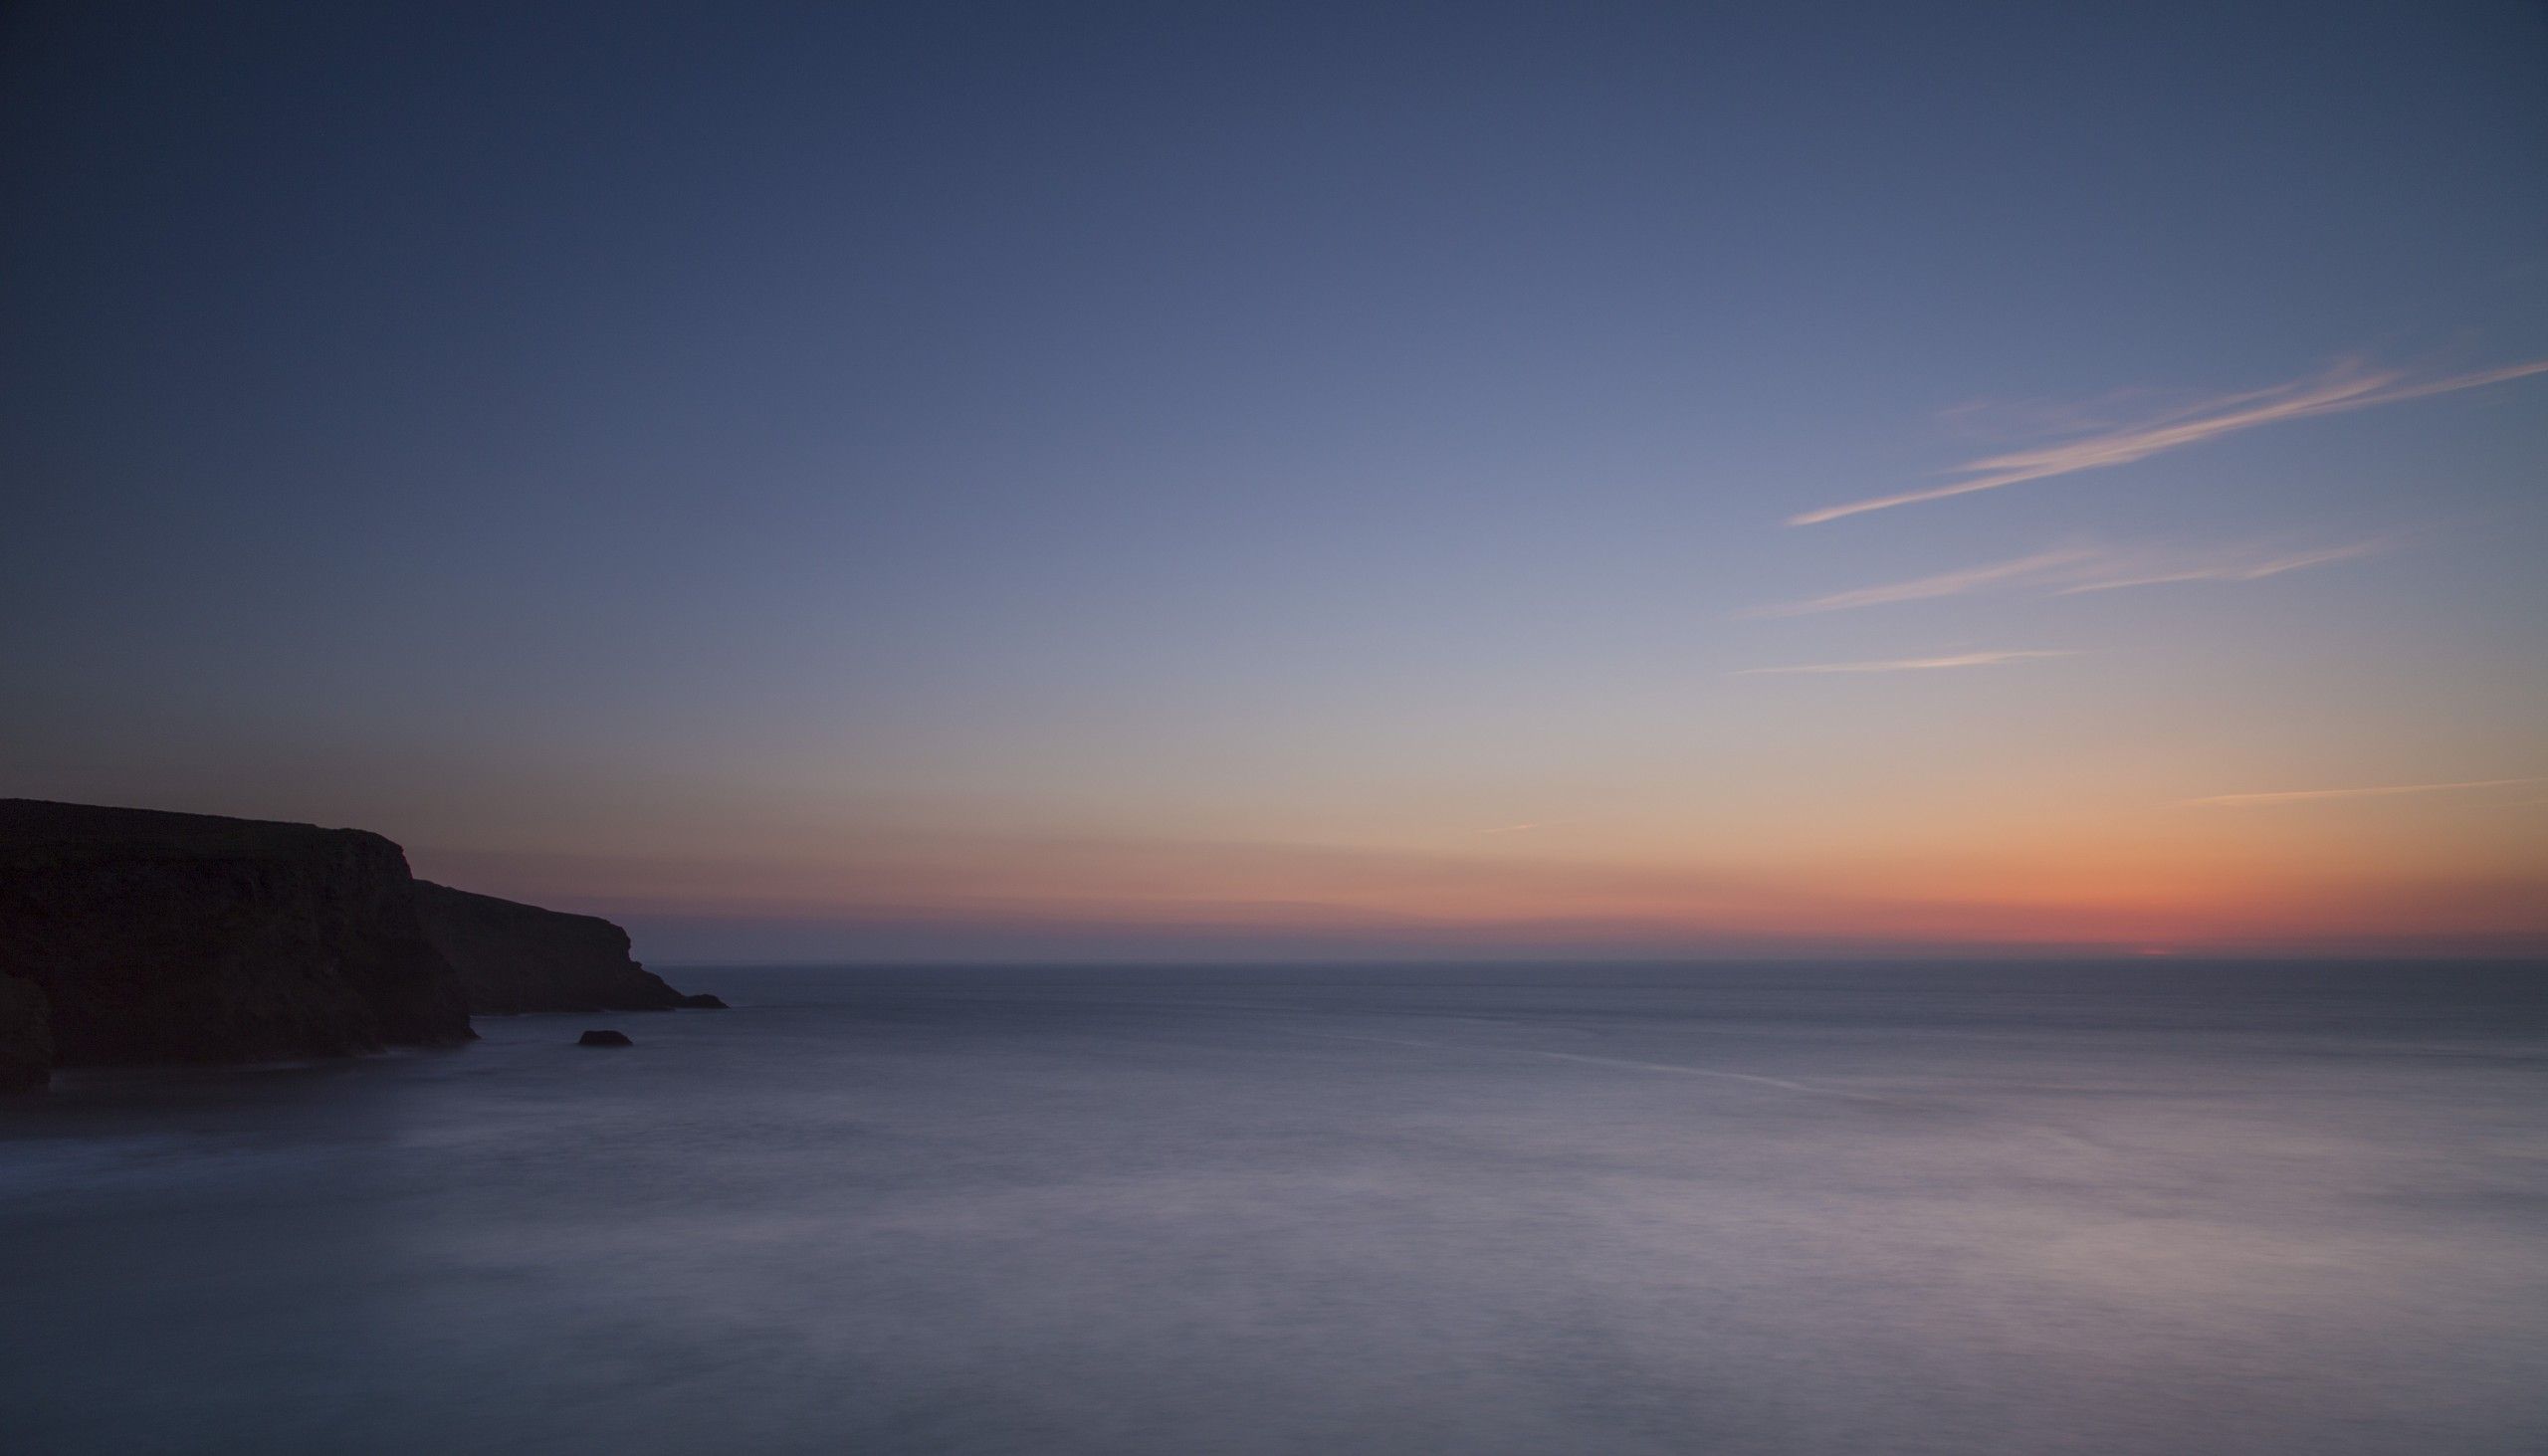 Cornish Sunset by Matthew Walker